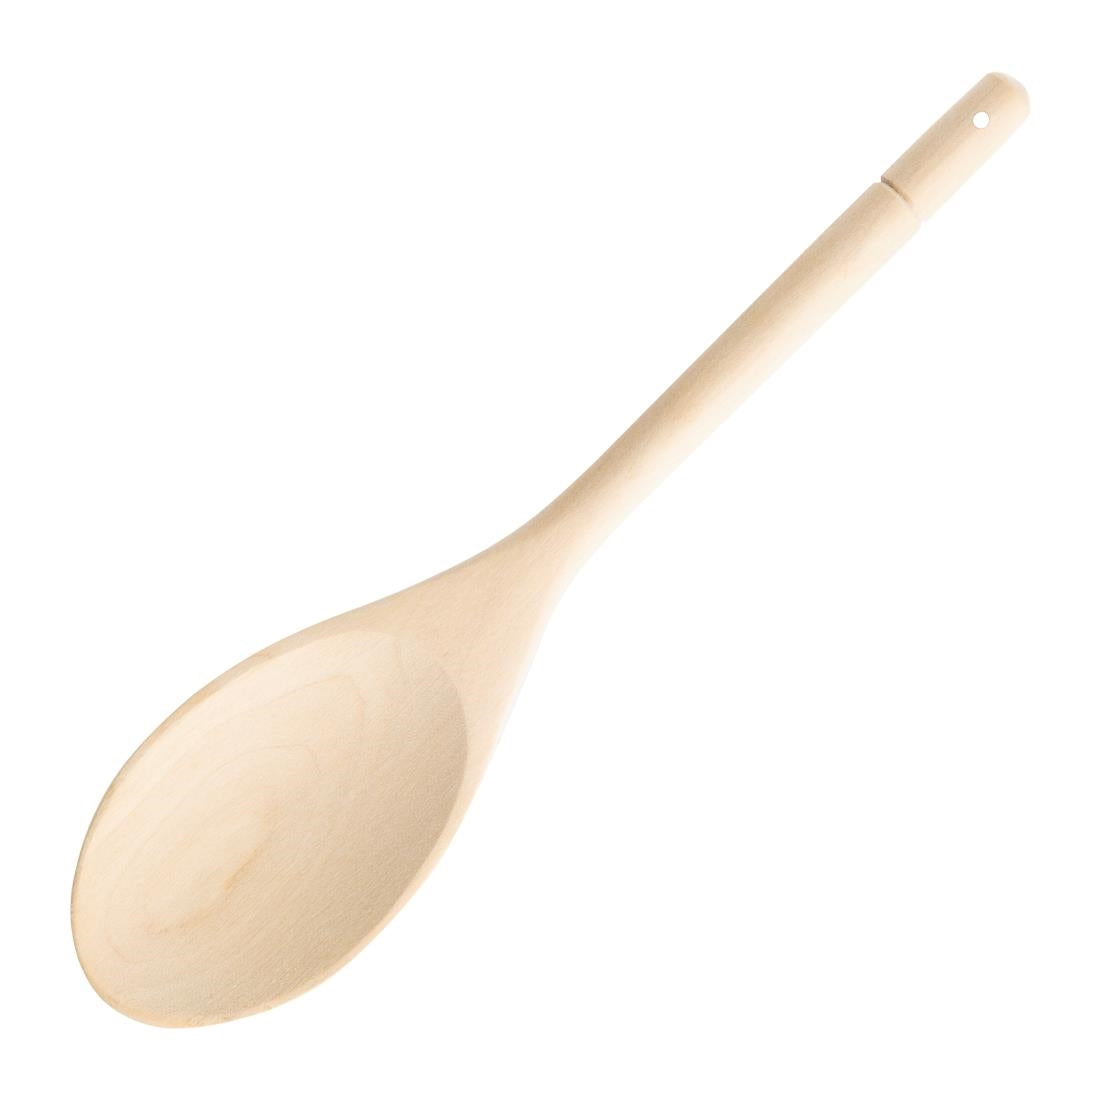 D770 Vogue Wooden Spoon 8"